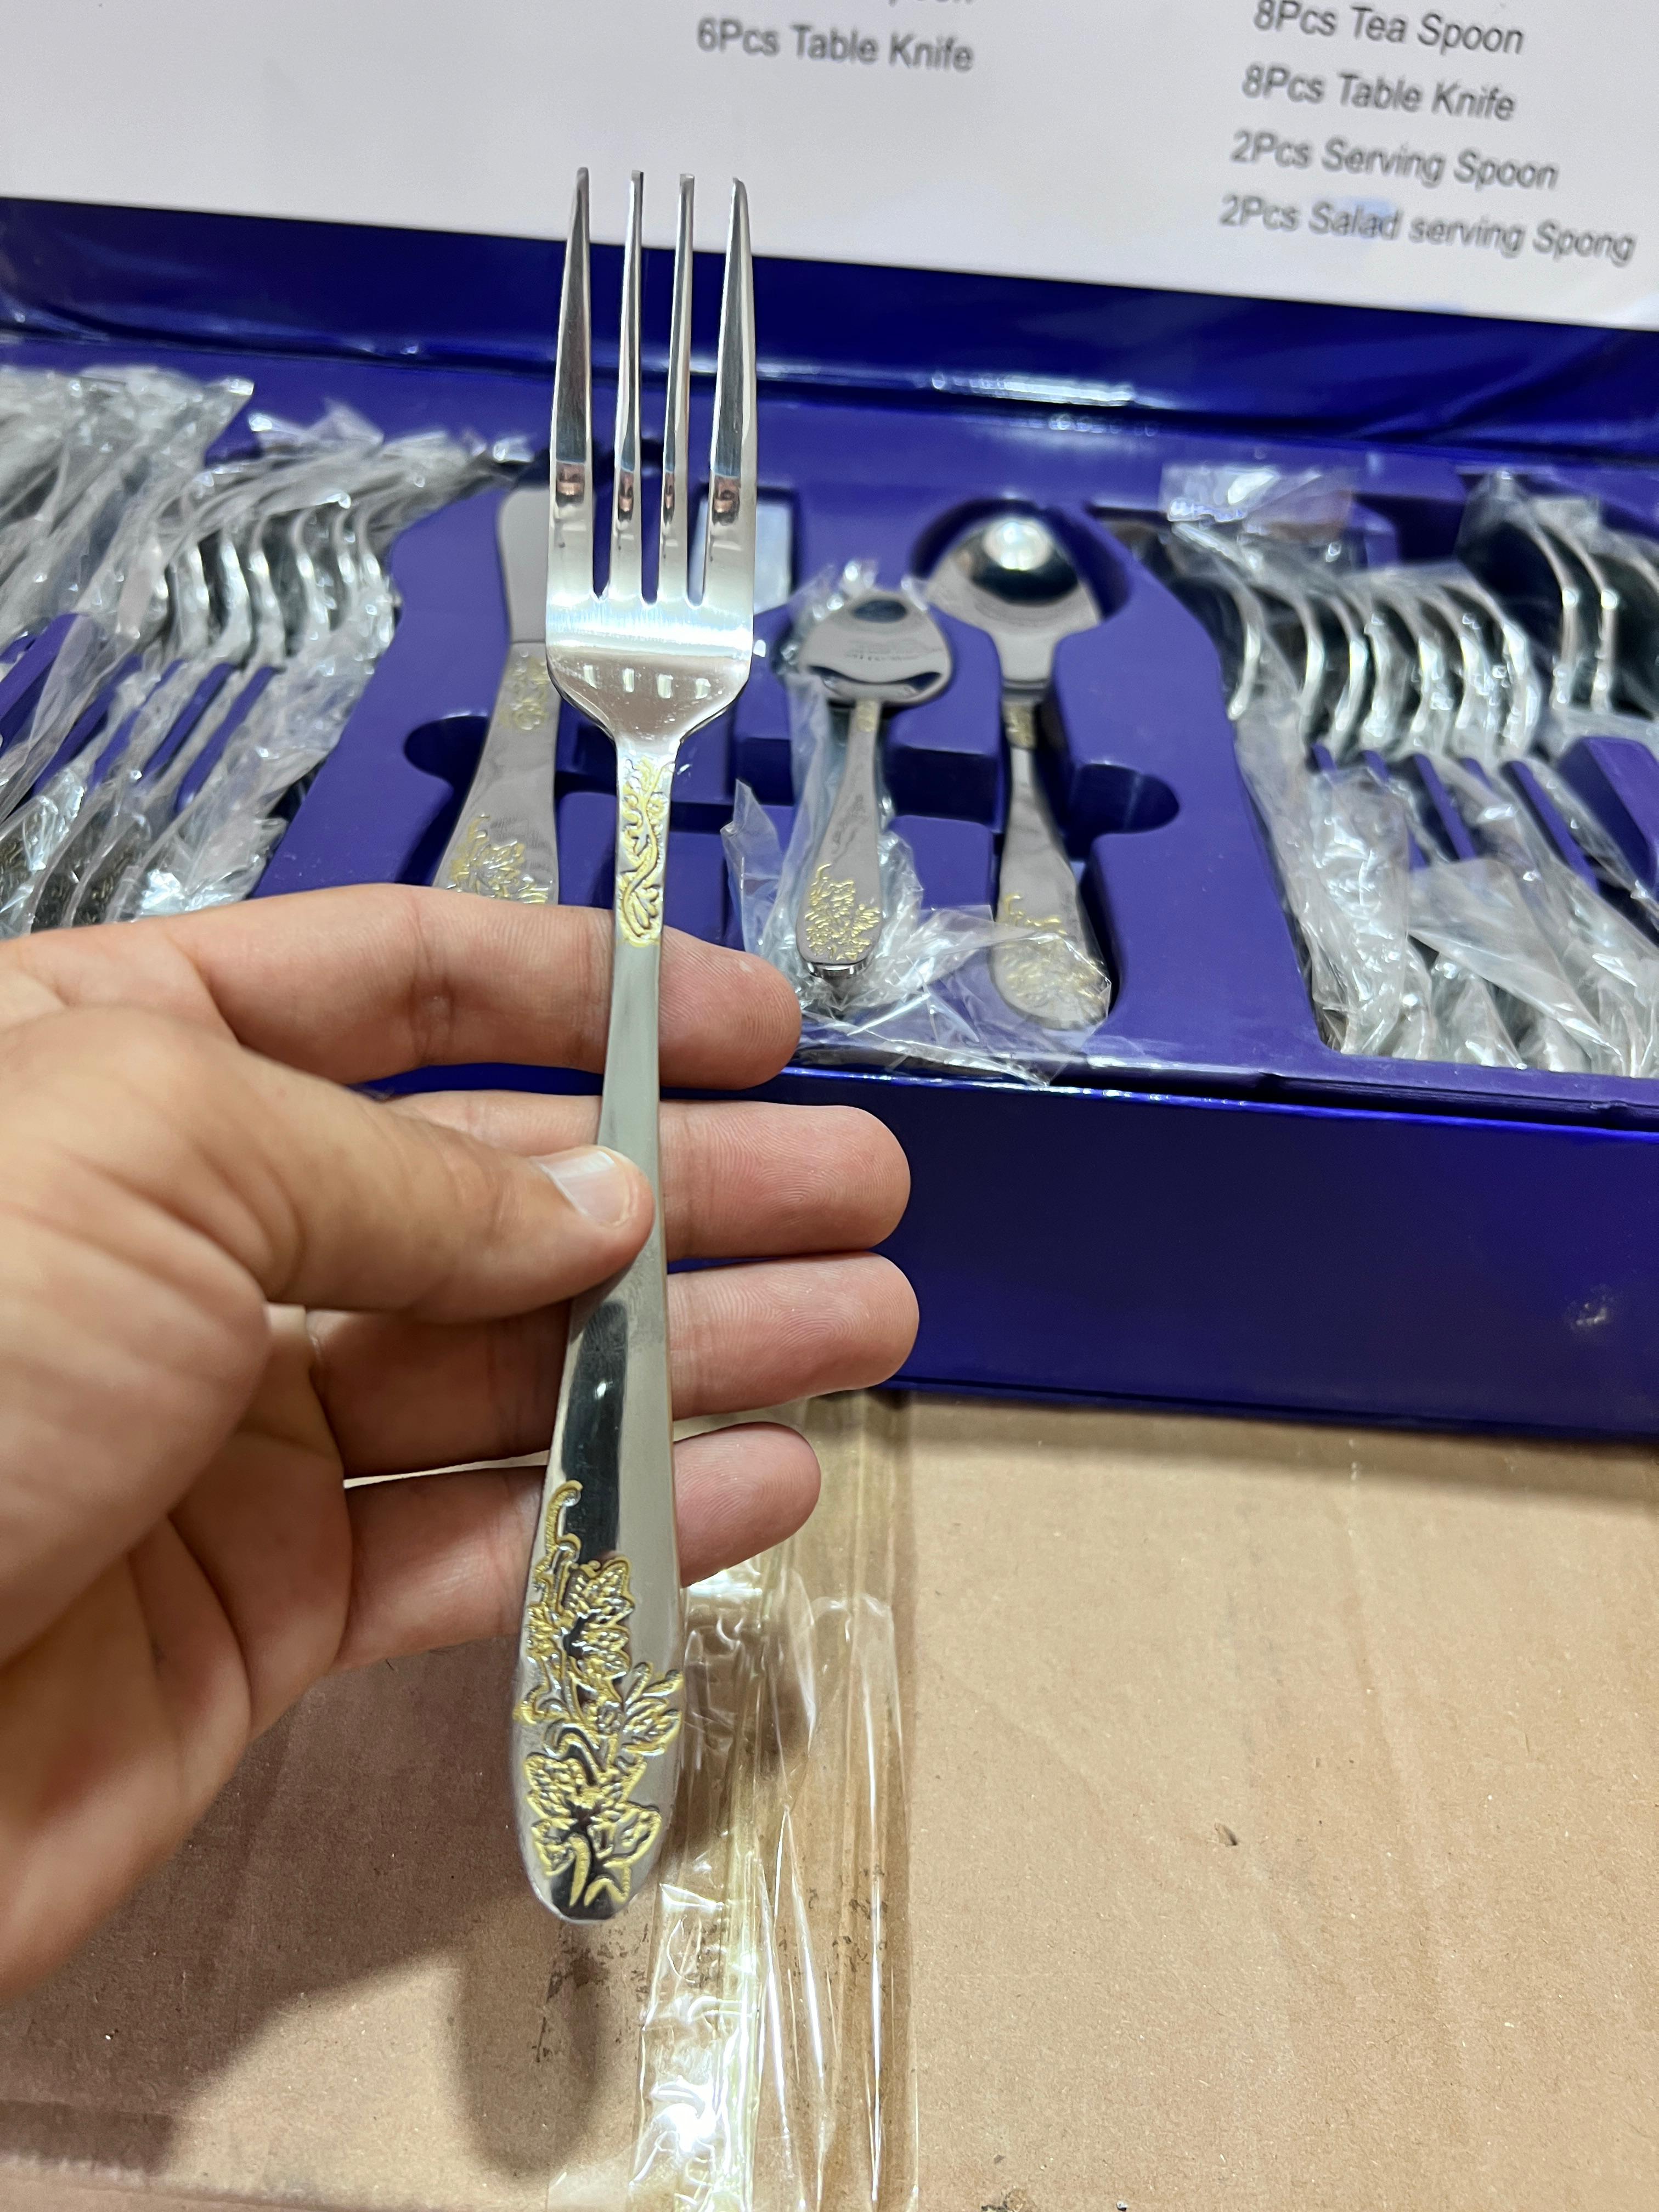 Germany imported Zepter international cutlery Set 36pcs